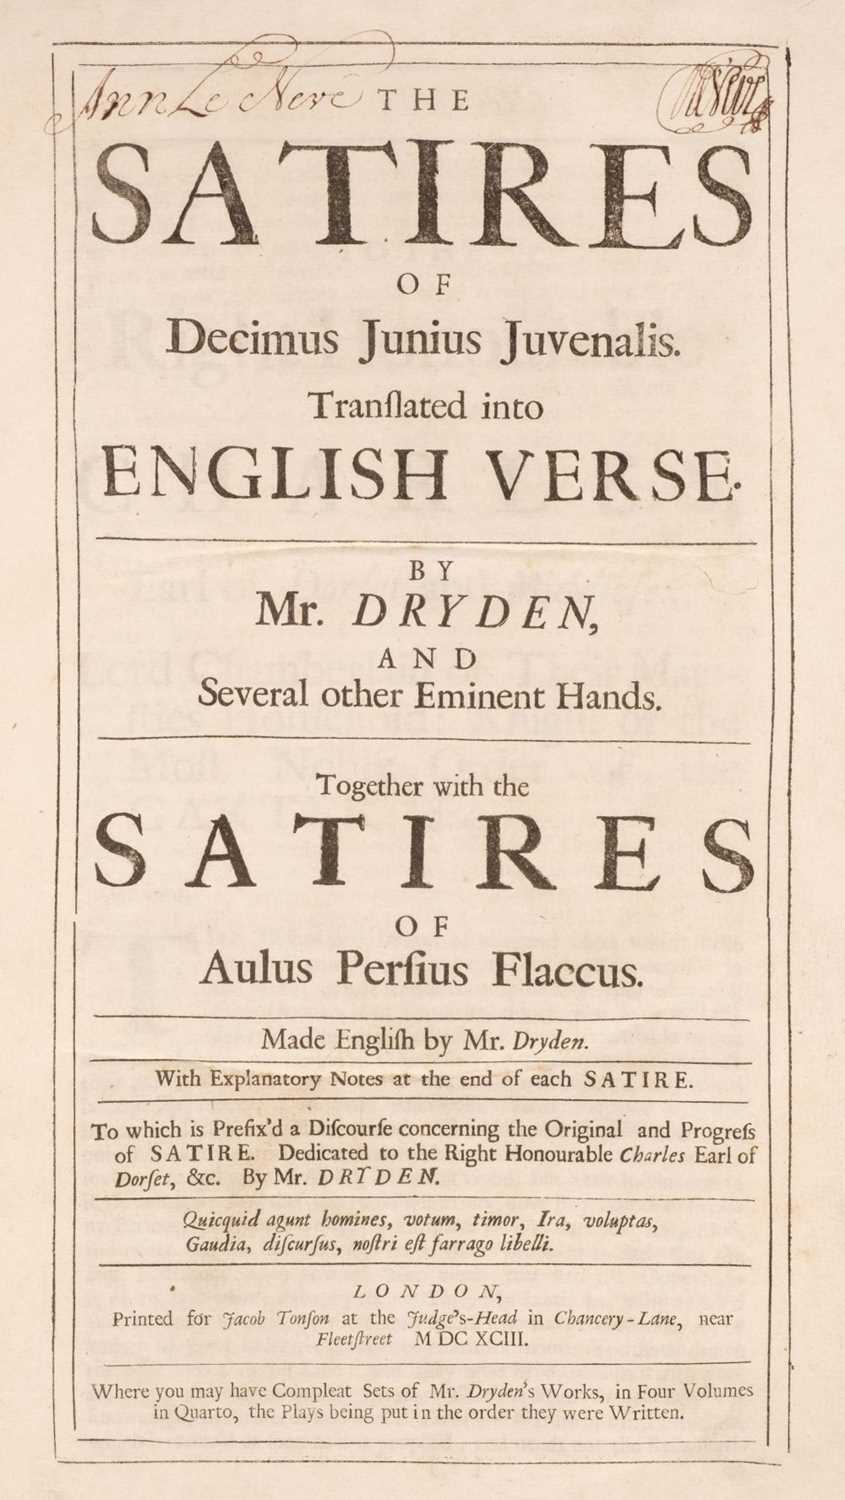 Lot 325 - Dryden (John, translator). The Satires of Decimus Junius Juvenalis, 1st edition, 1693